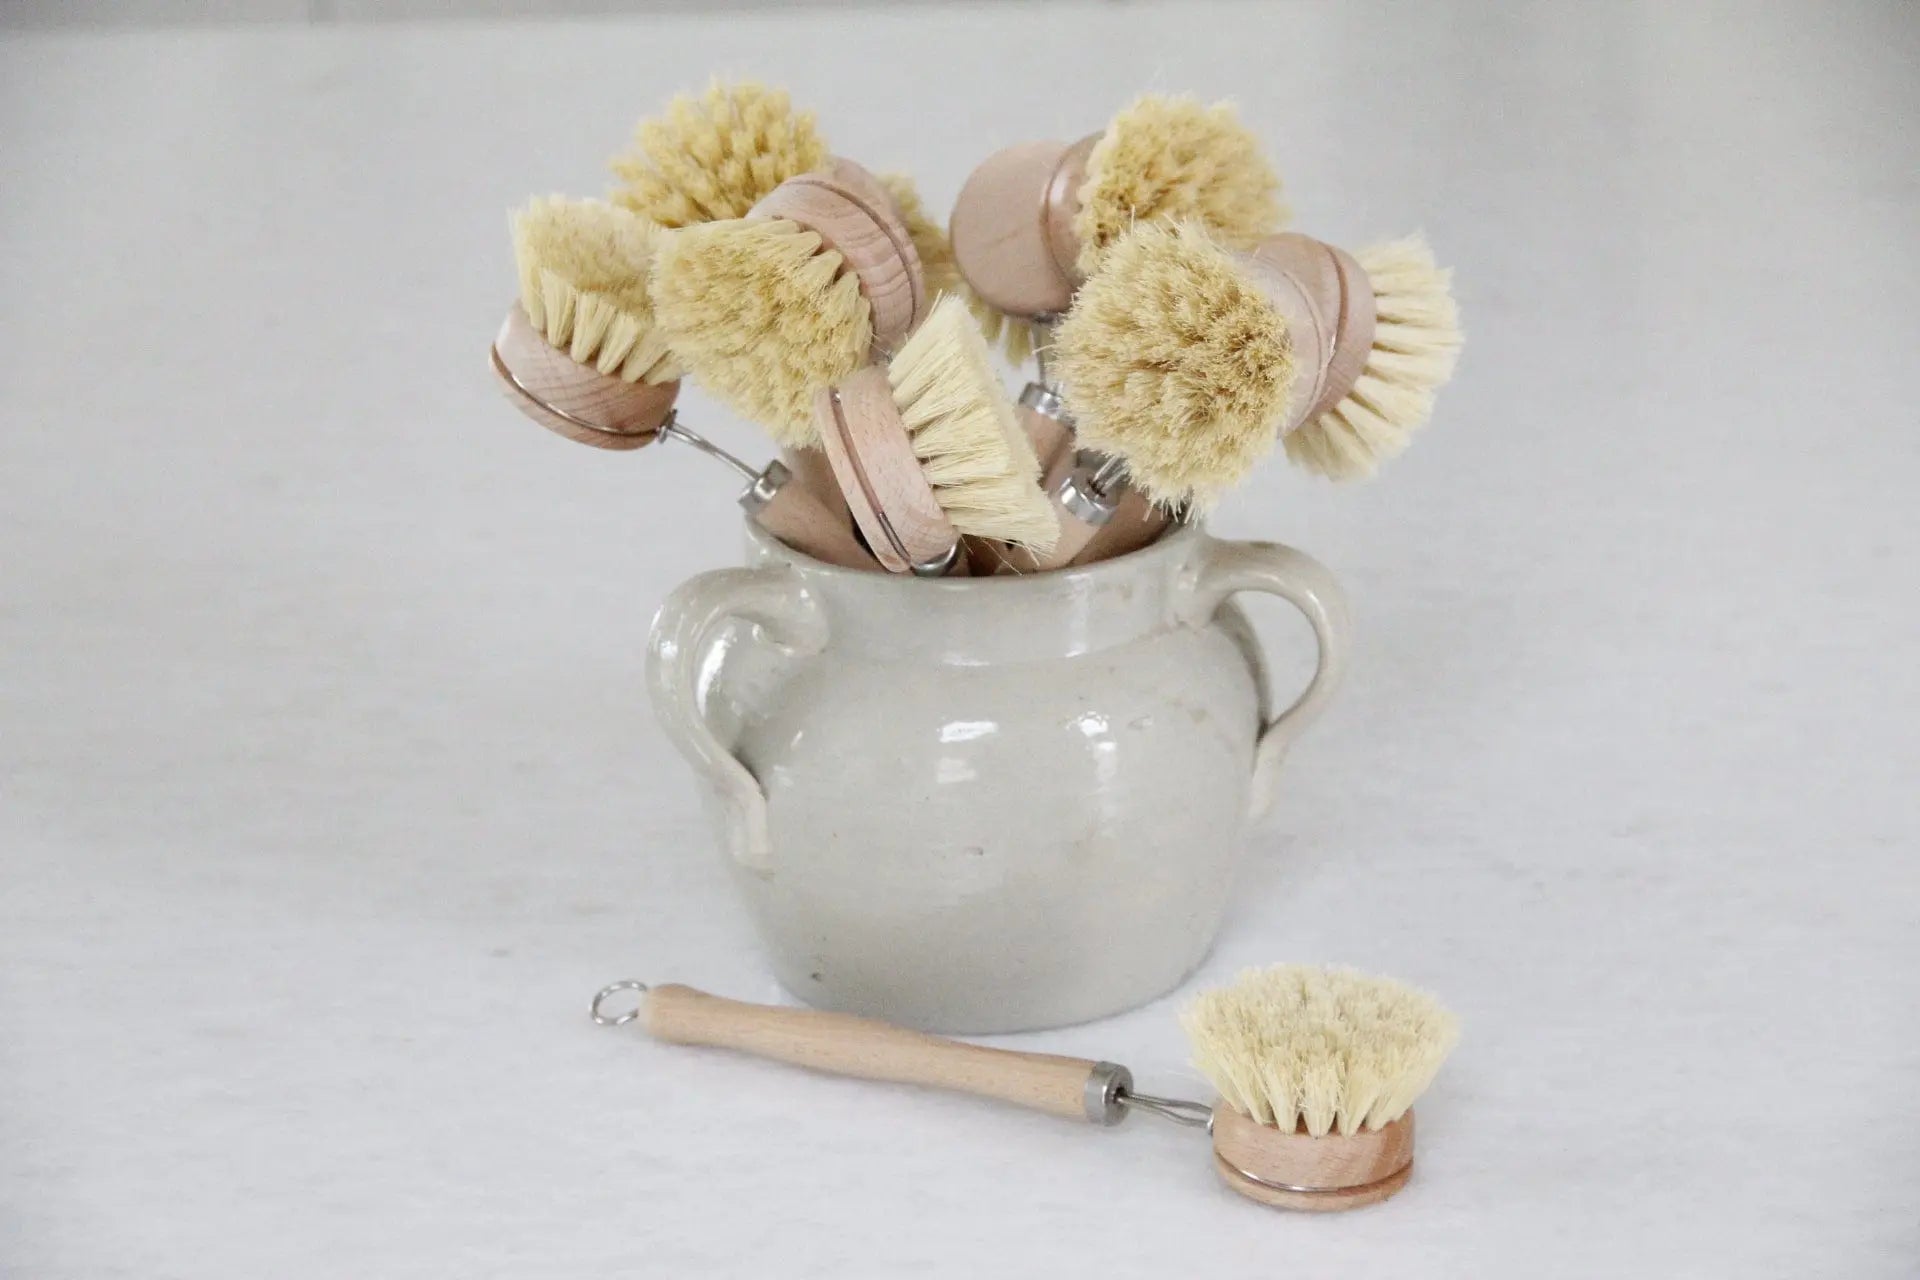 Beachwood Long Handle Dish Brush | Kitchen Scrub Brush  Debra Hall Lifestyle